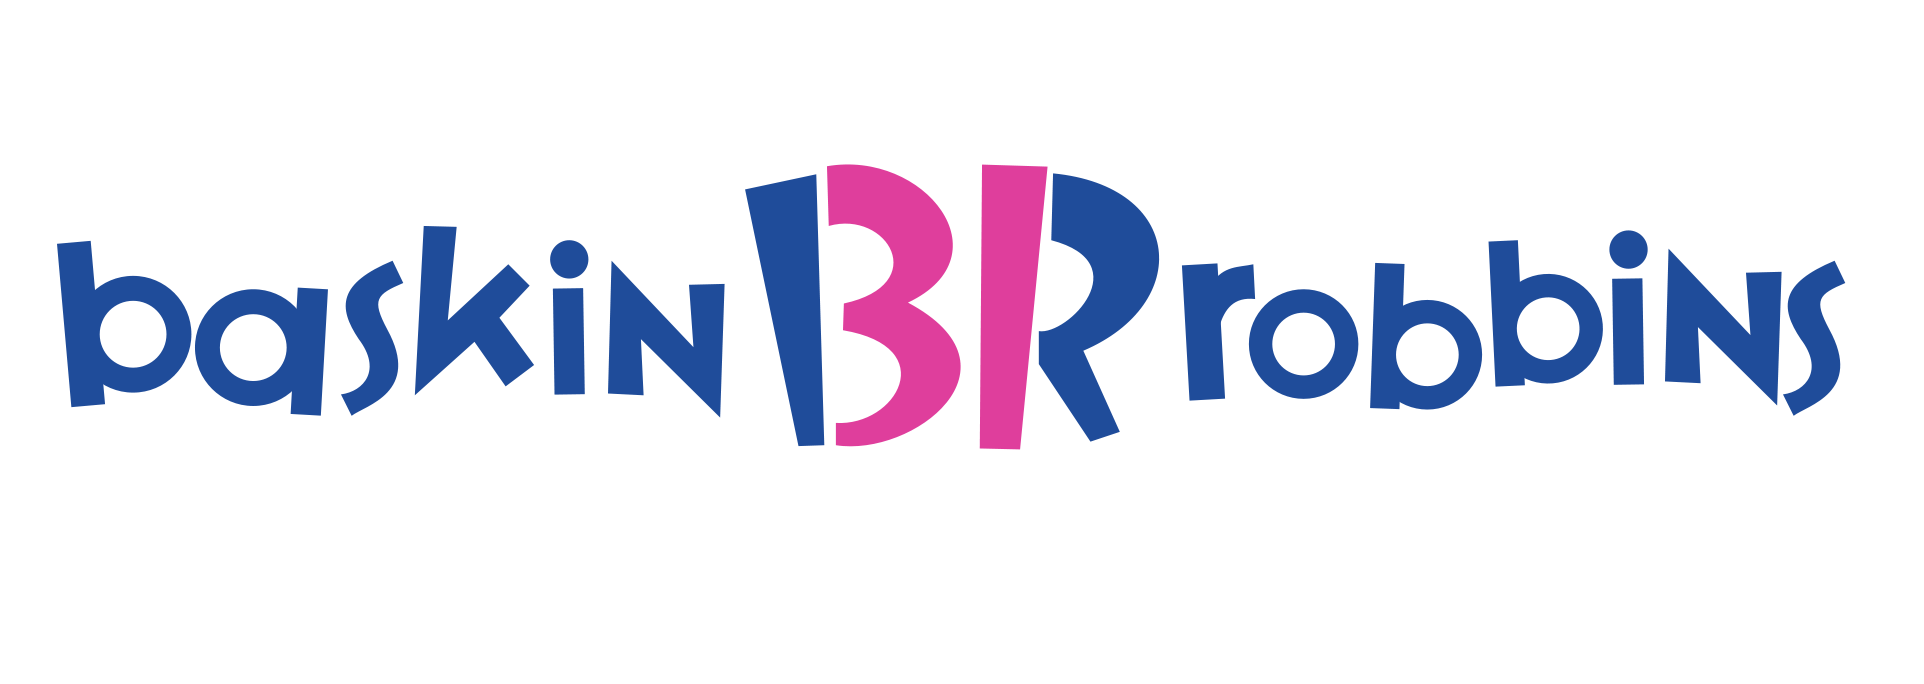 Baskin Robbin Logo Background PNG Image